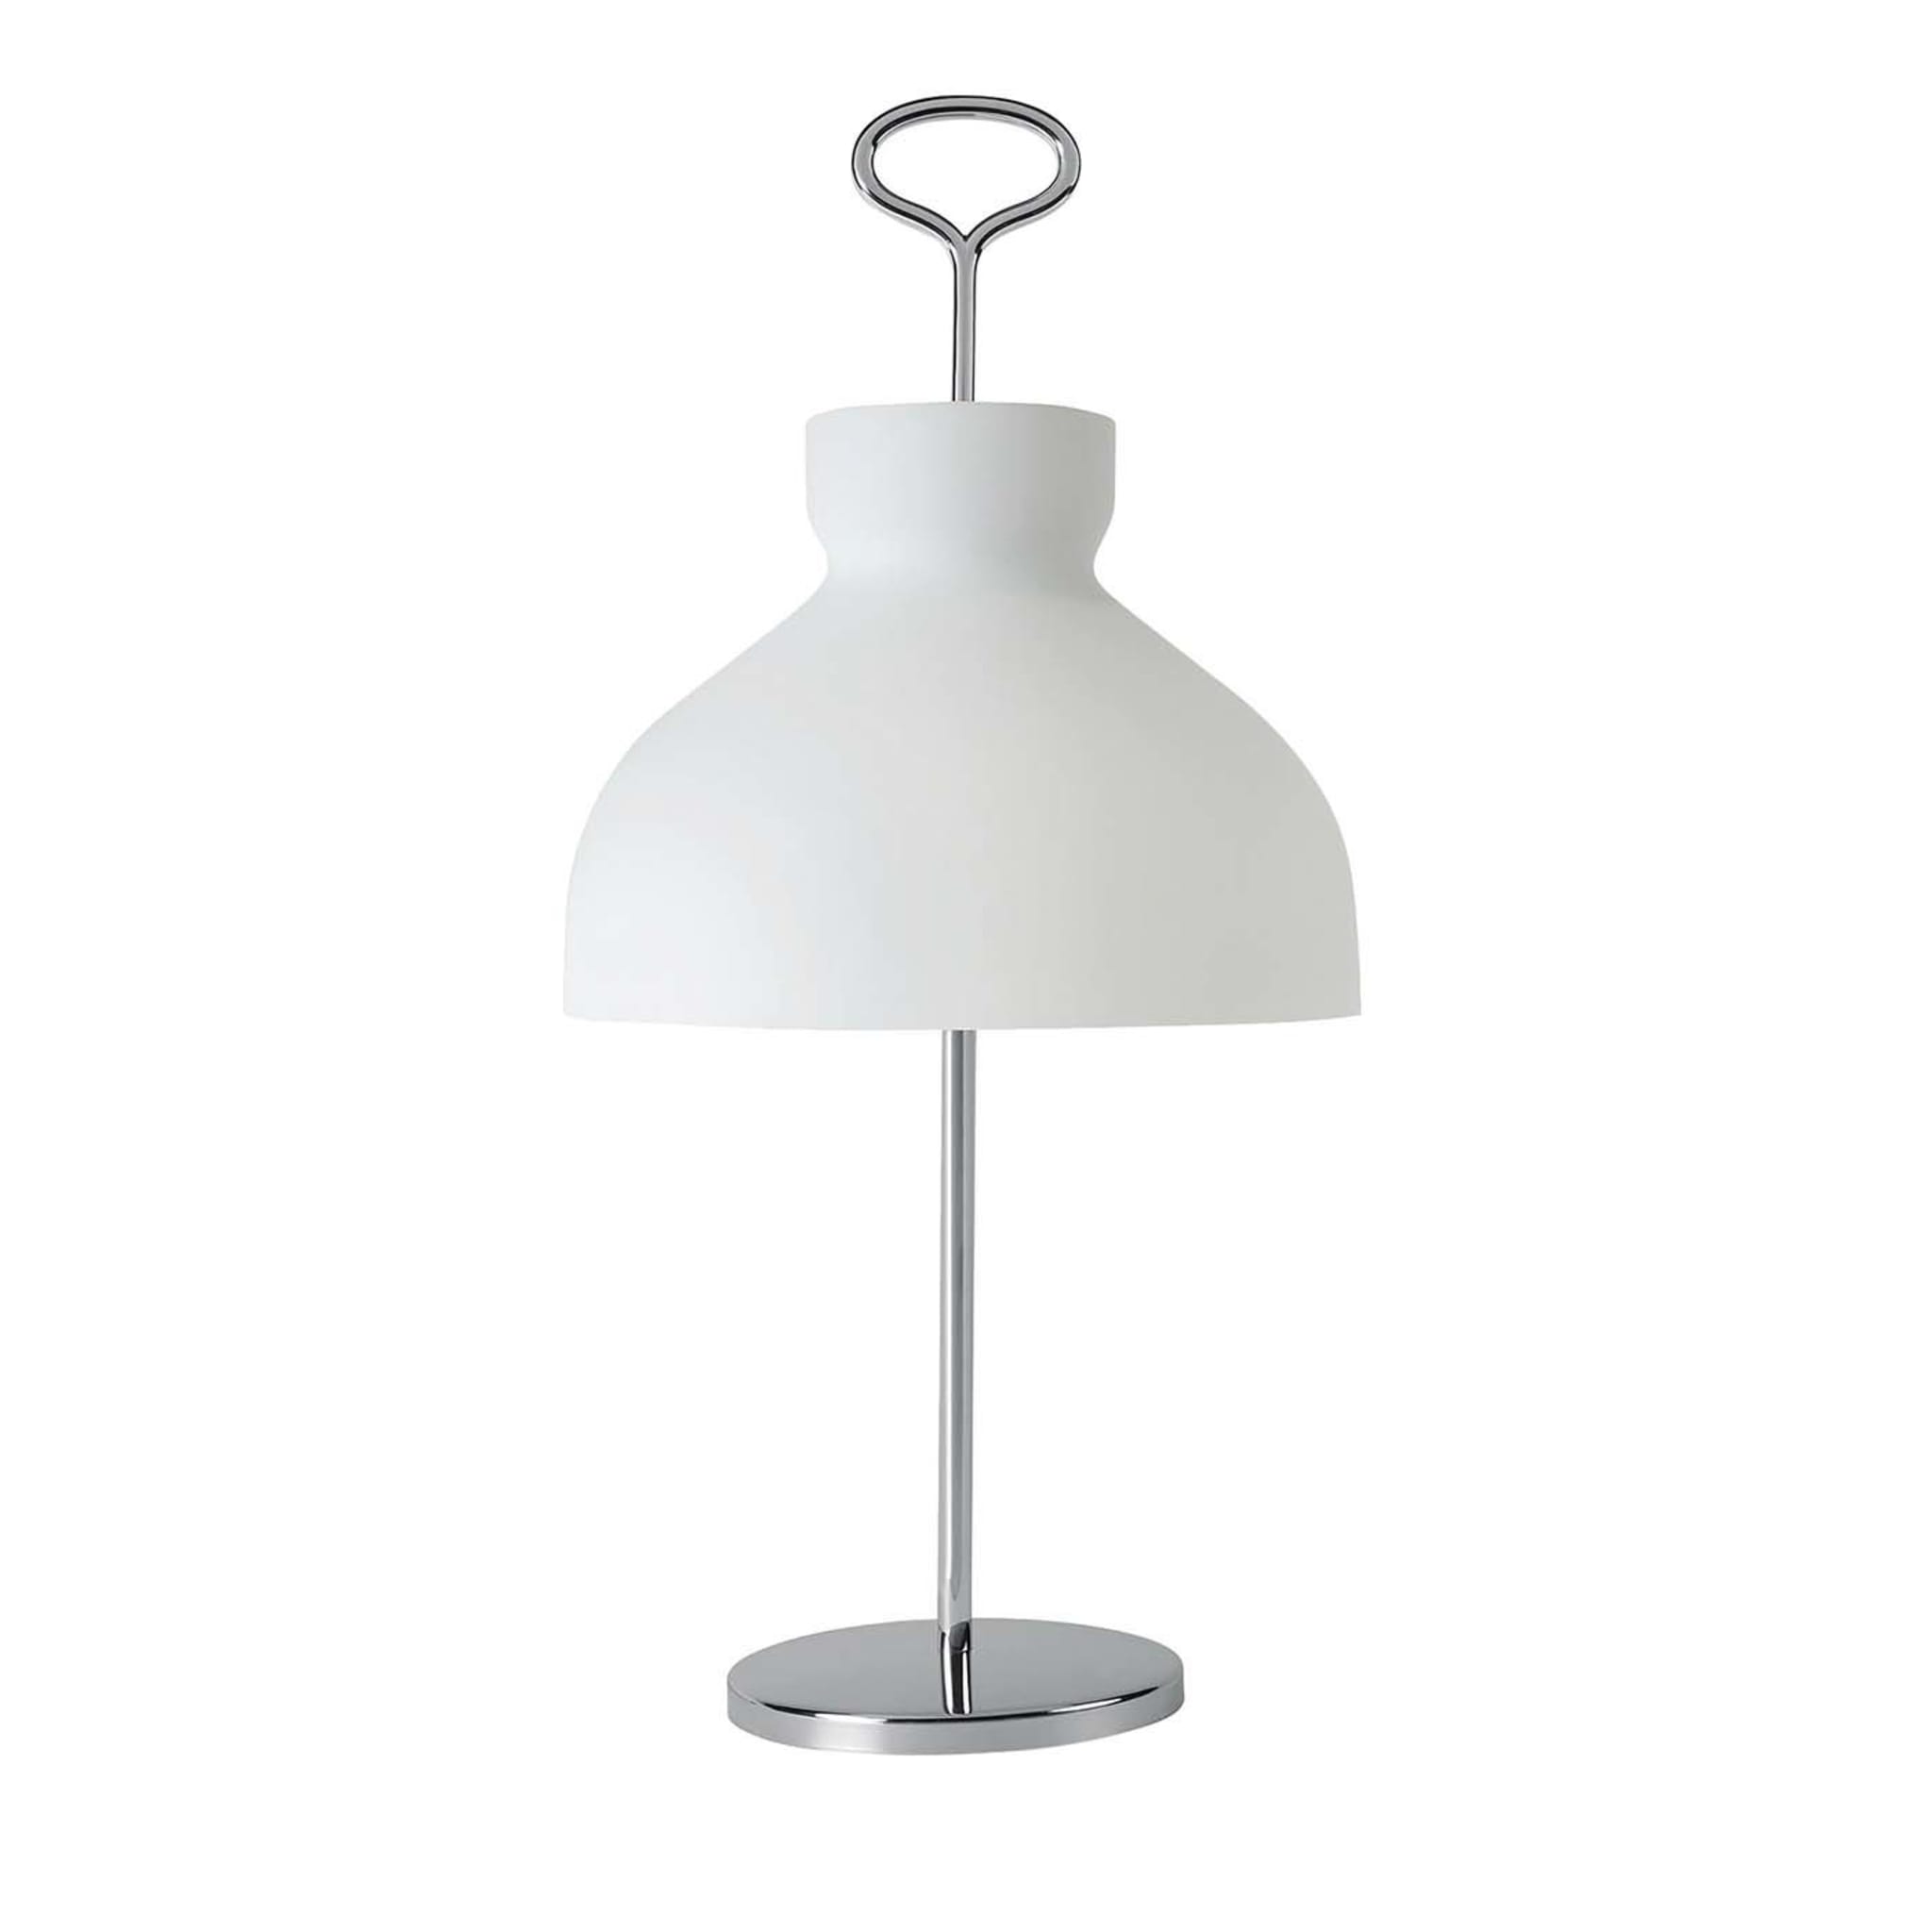 Arenzano Iron Table Lamp by Ignazio Gardella - Main view